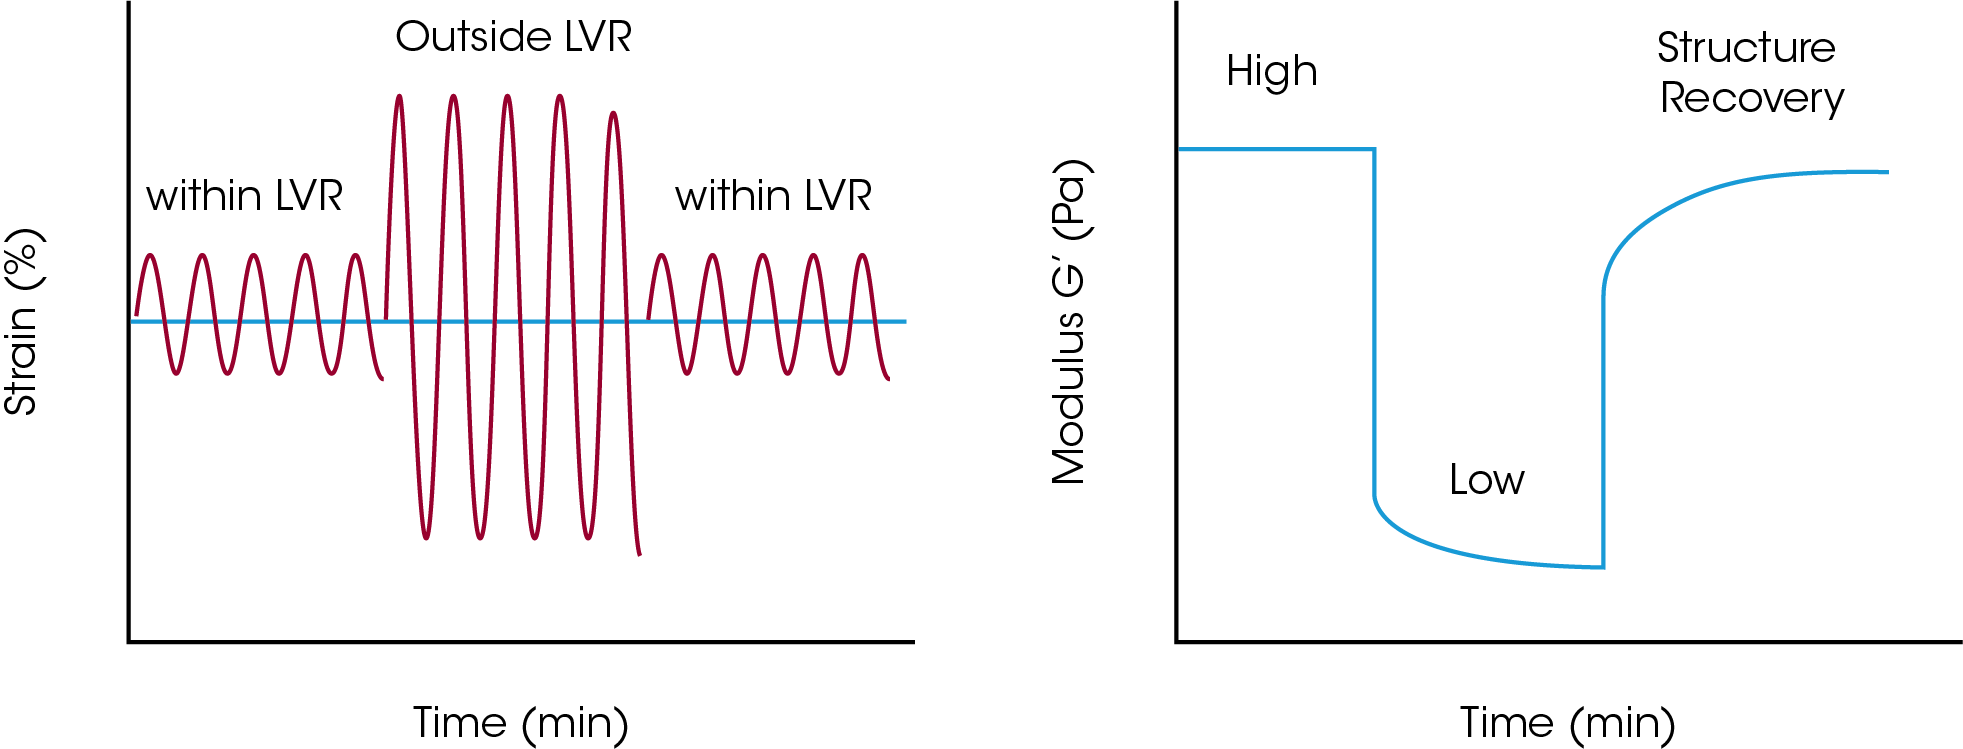 Figure 3. Three-step oscillation method: viscoelastic behavior of a thixotropic material